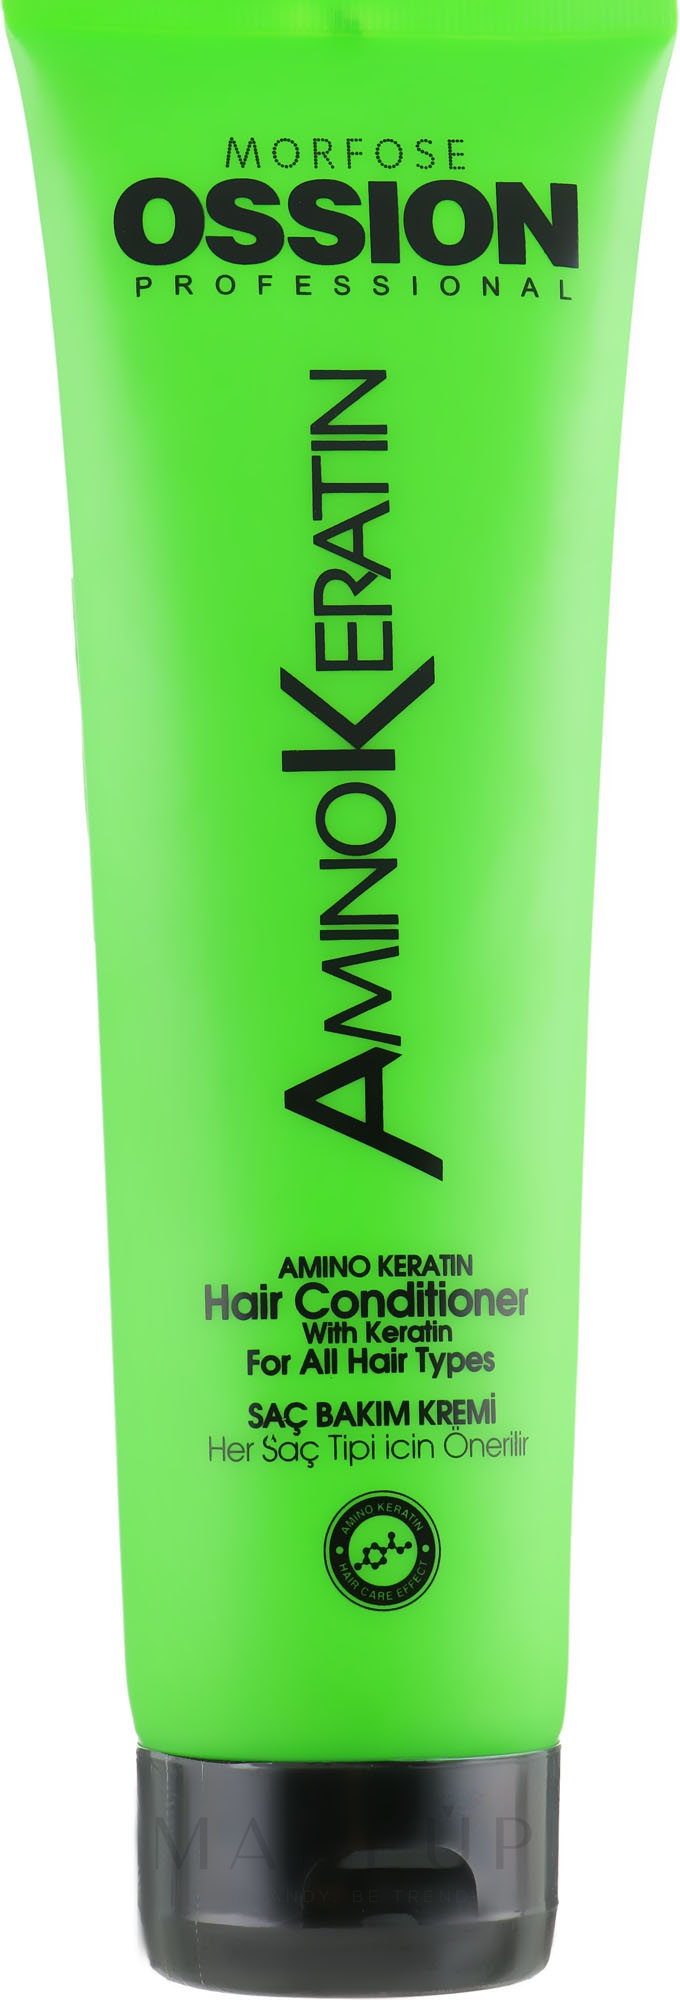 Morfose Ossion Amino Keratin Hair Conditioner - Haarspülung mit Keratin ...